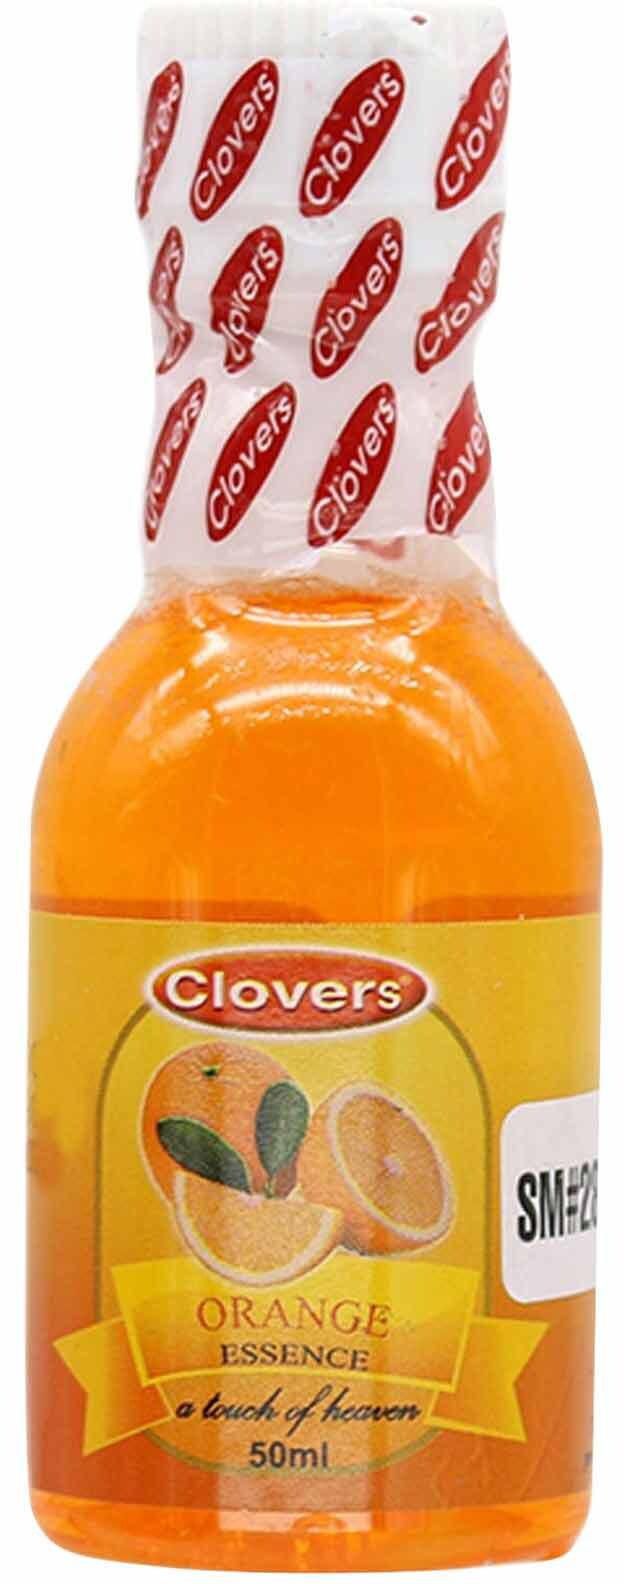 Clovers Orange Essence 50ml